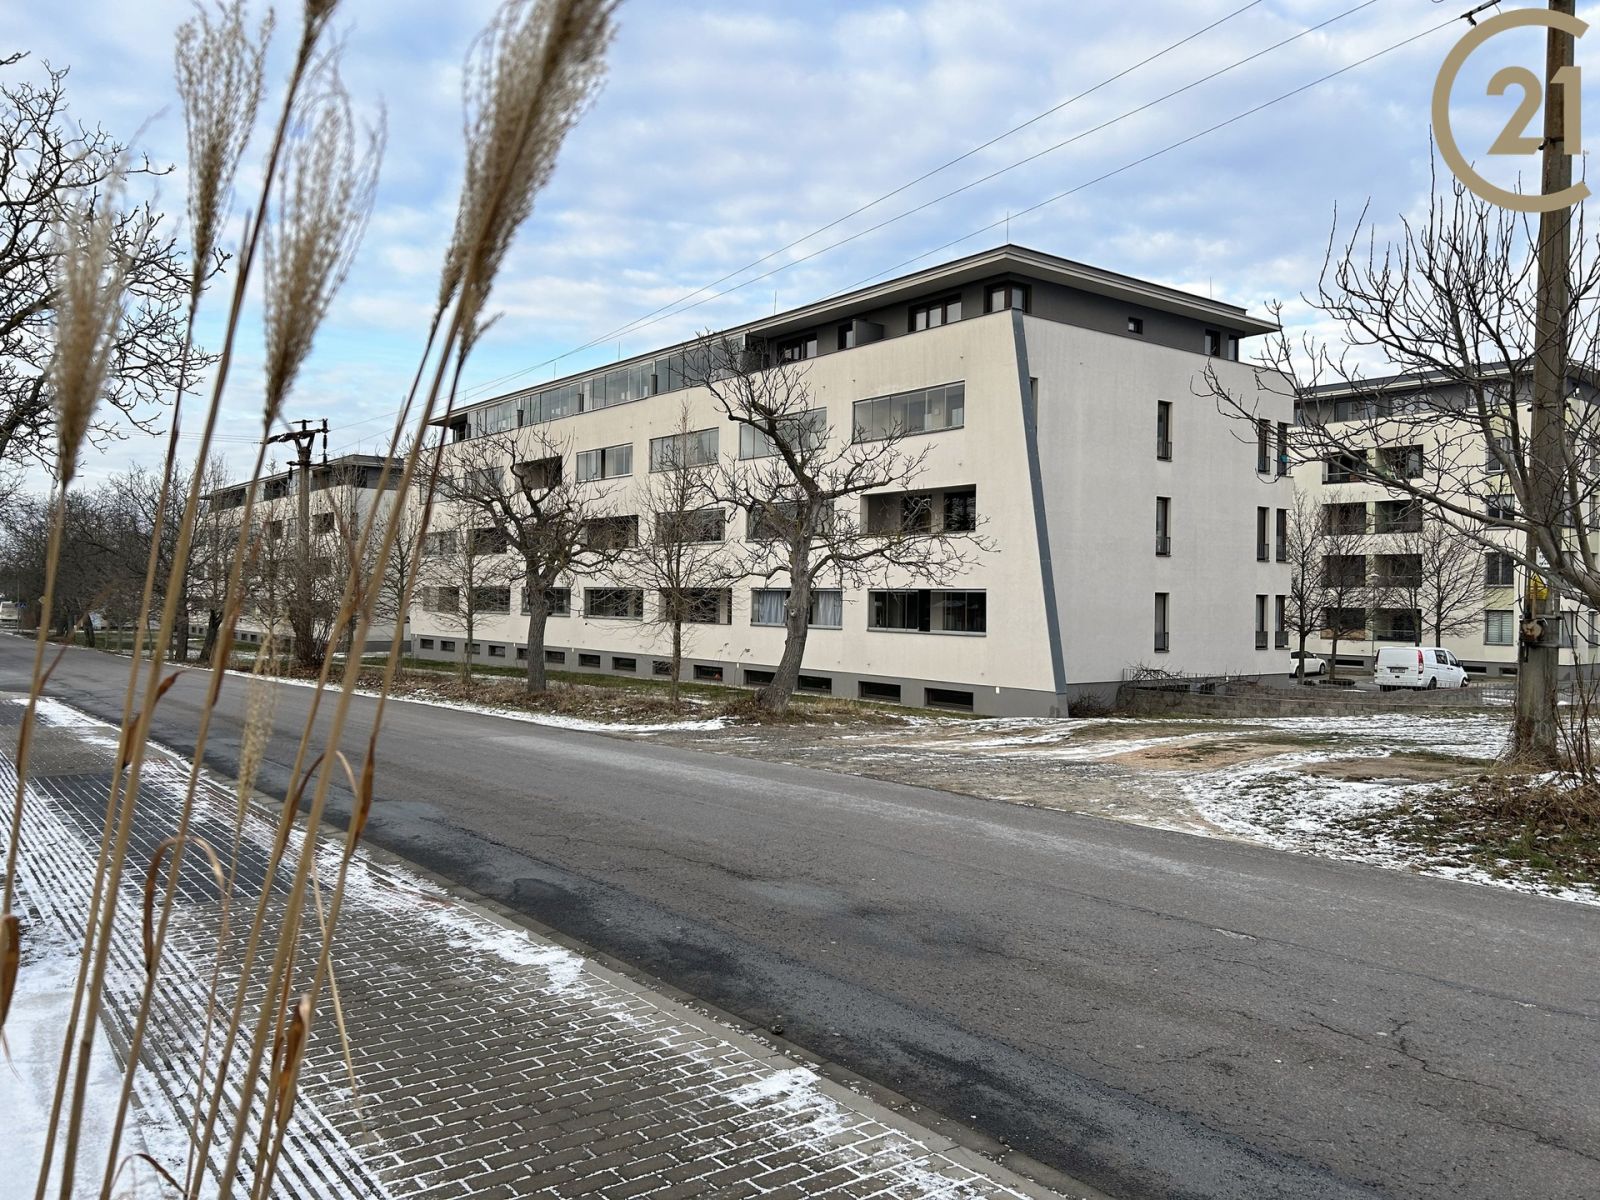 prodej pozemku výstavba bytových domů a smíšená výroba,  17000 m2, nedaleko centra Chrudimi, obrázek č. 1